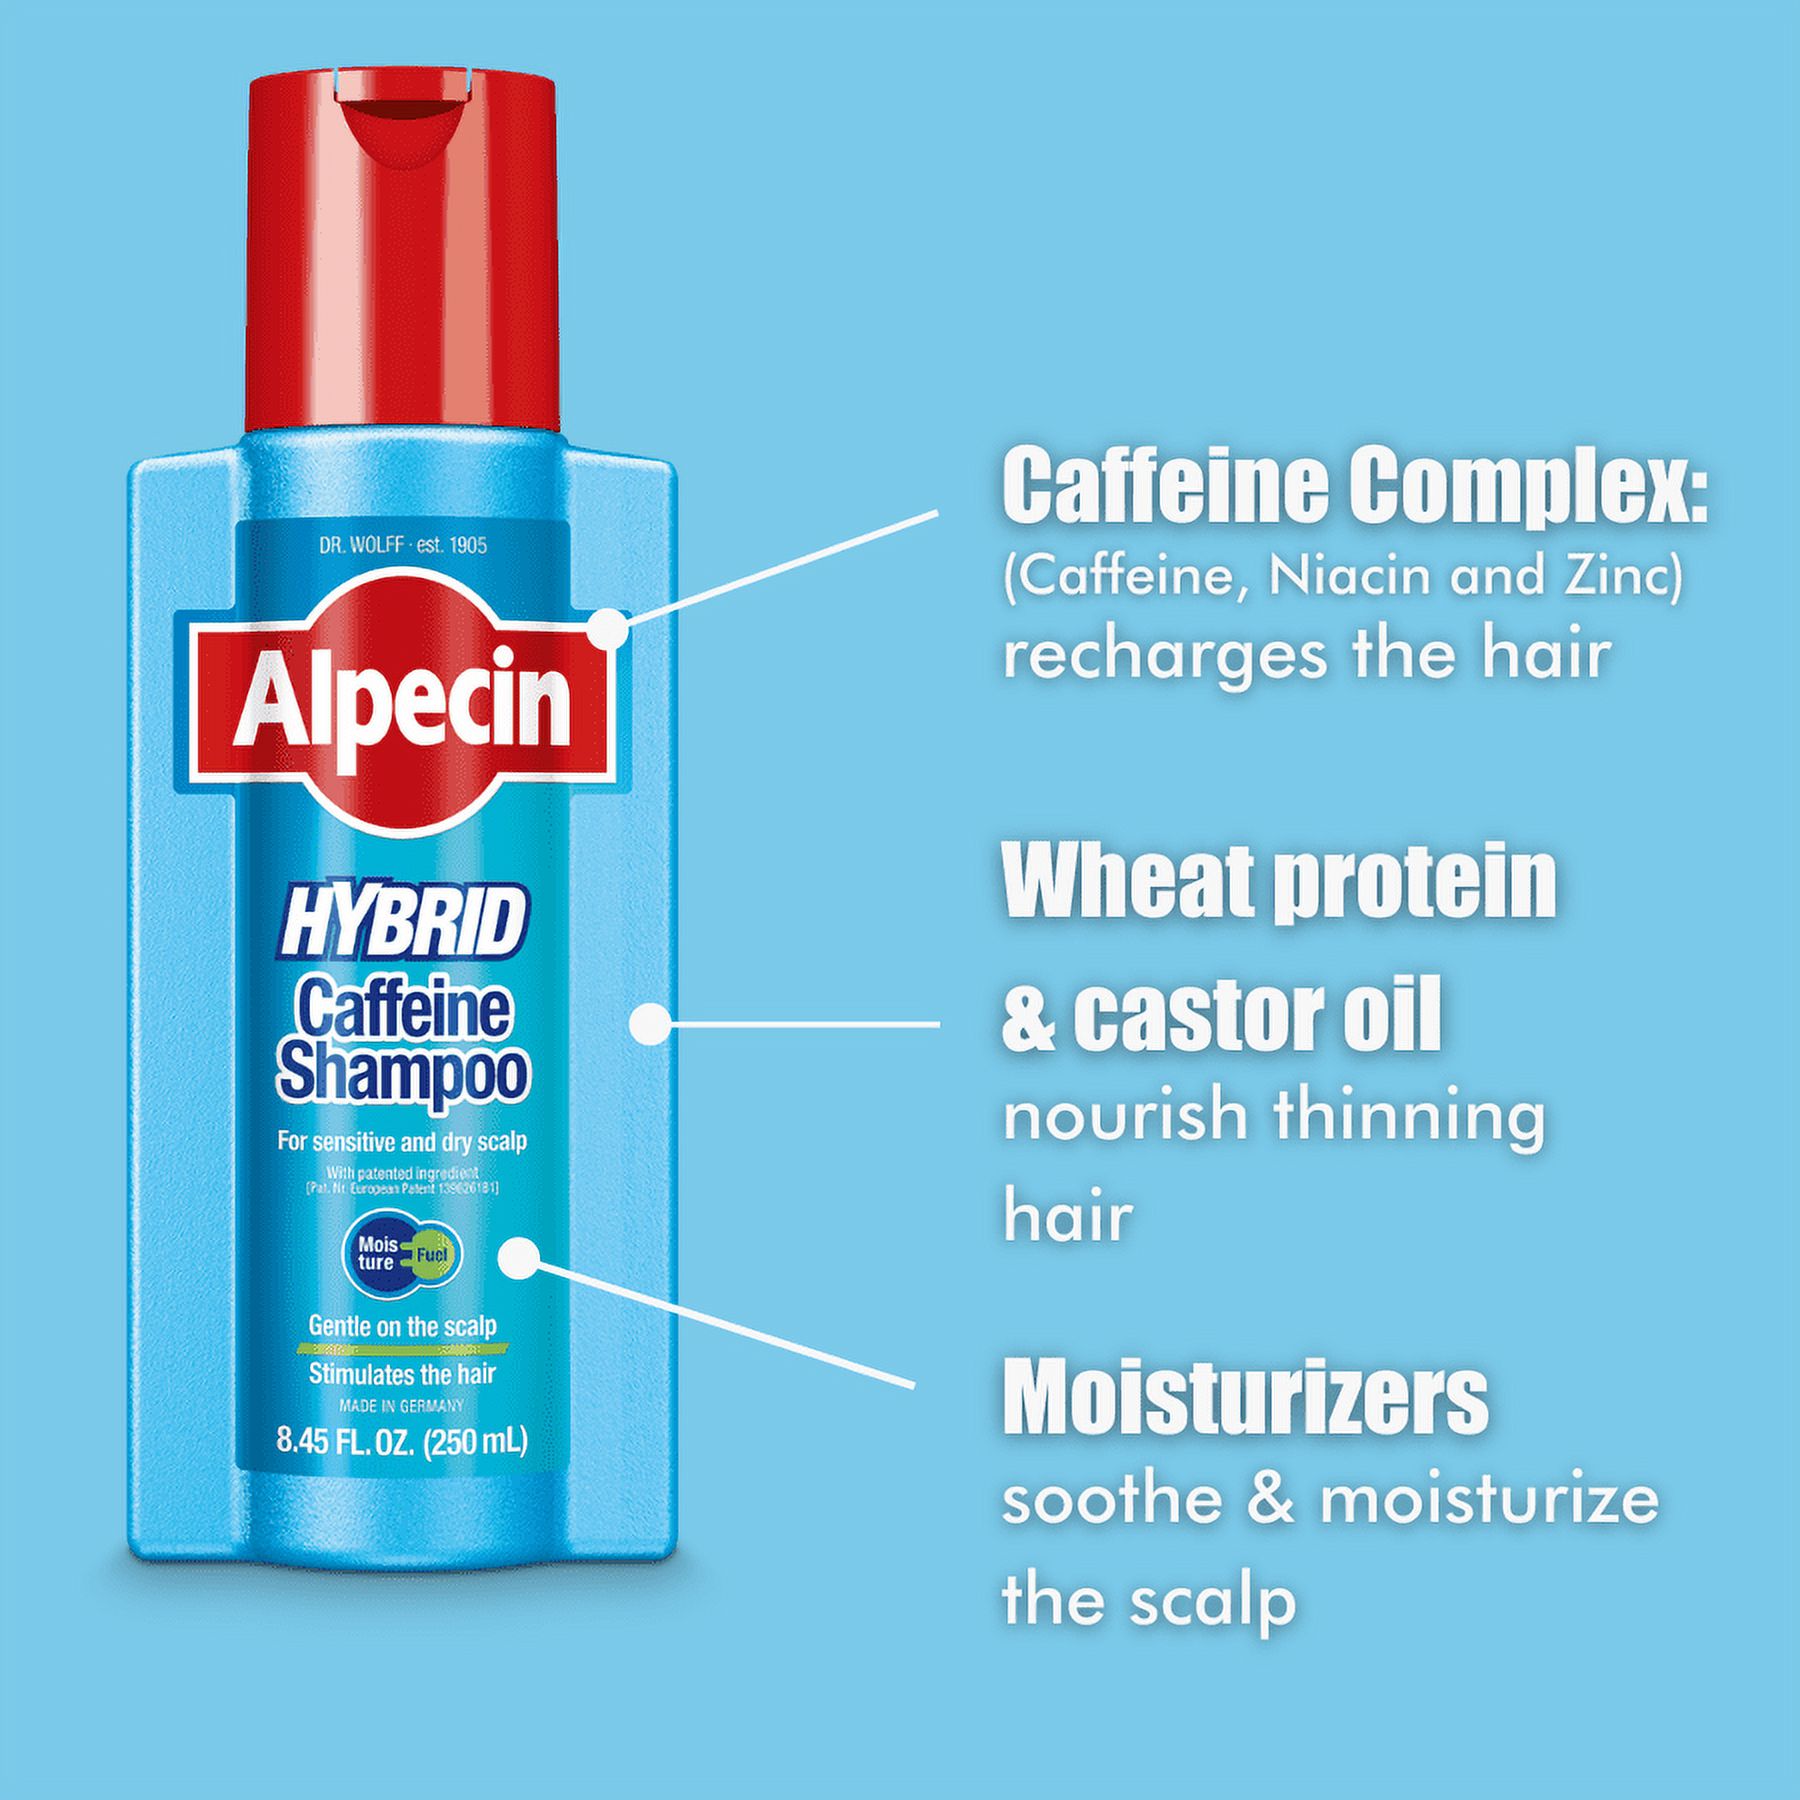 Alpecin Hybrid Caffeine Shampoo for Men with Dry, Itchy, Sensitive Scalps Moisturizes Thinning Hair Natural Hair Growth, 8.45 fl. oz. - image 3 of 5